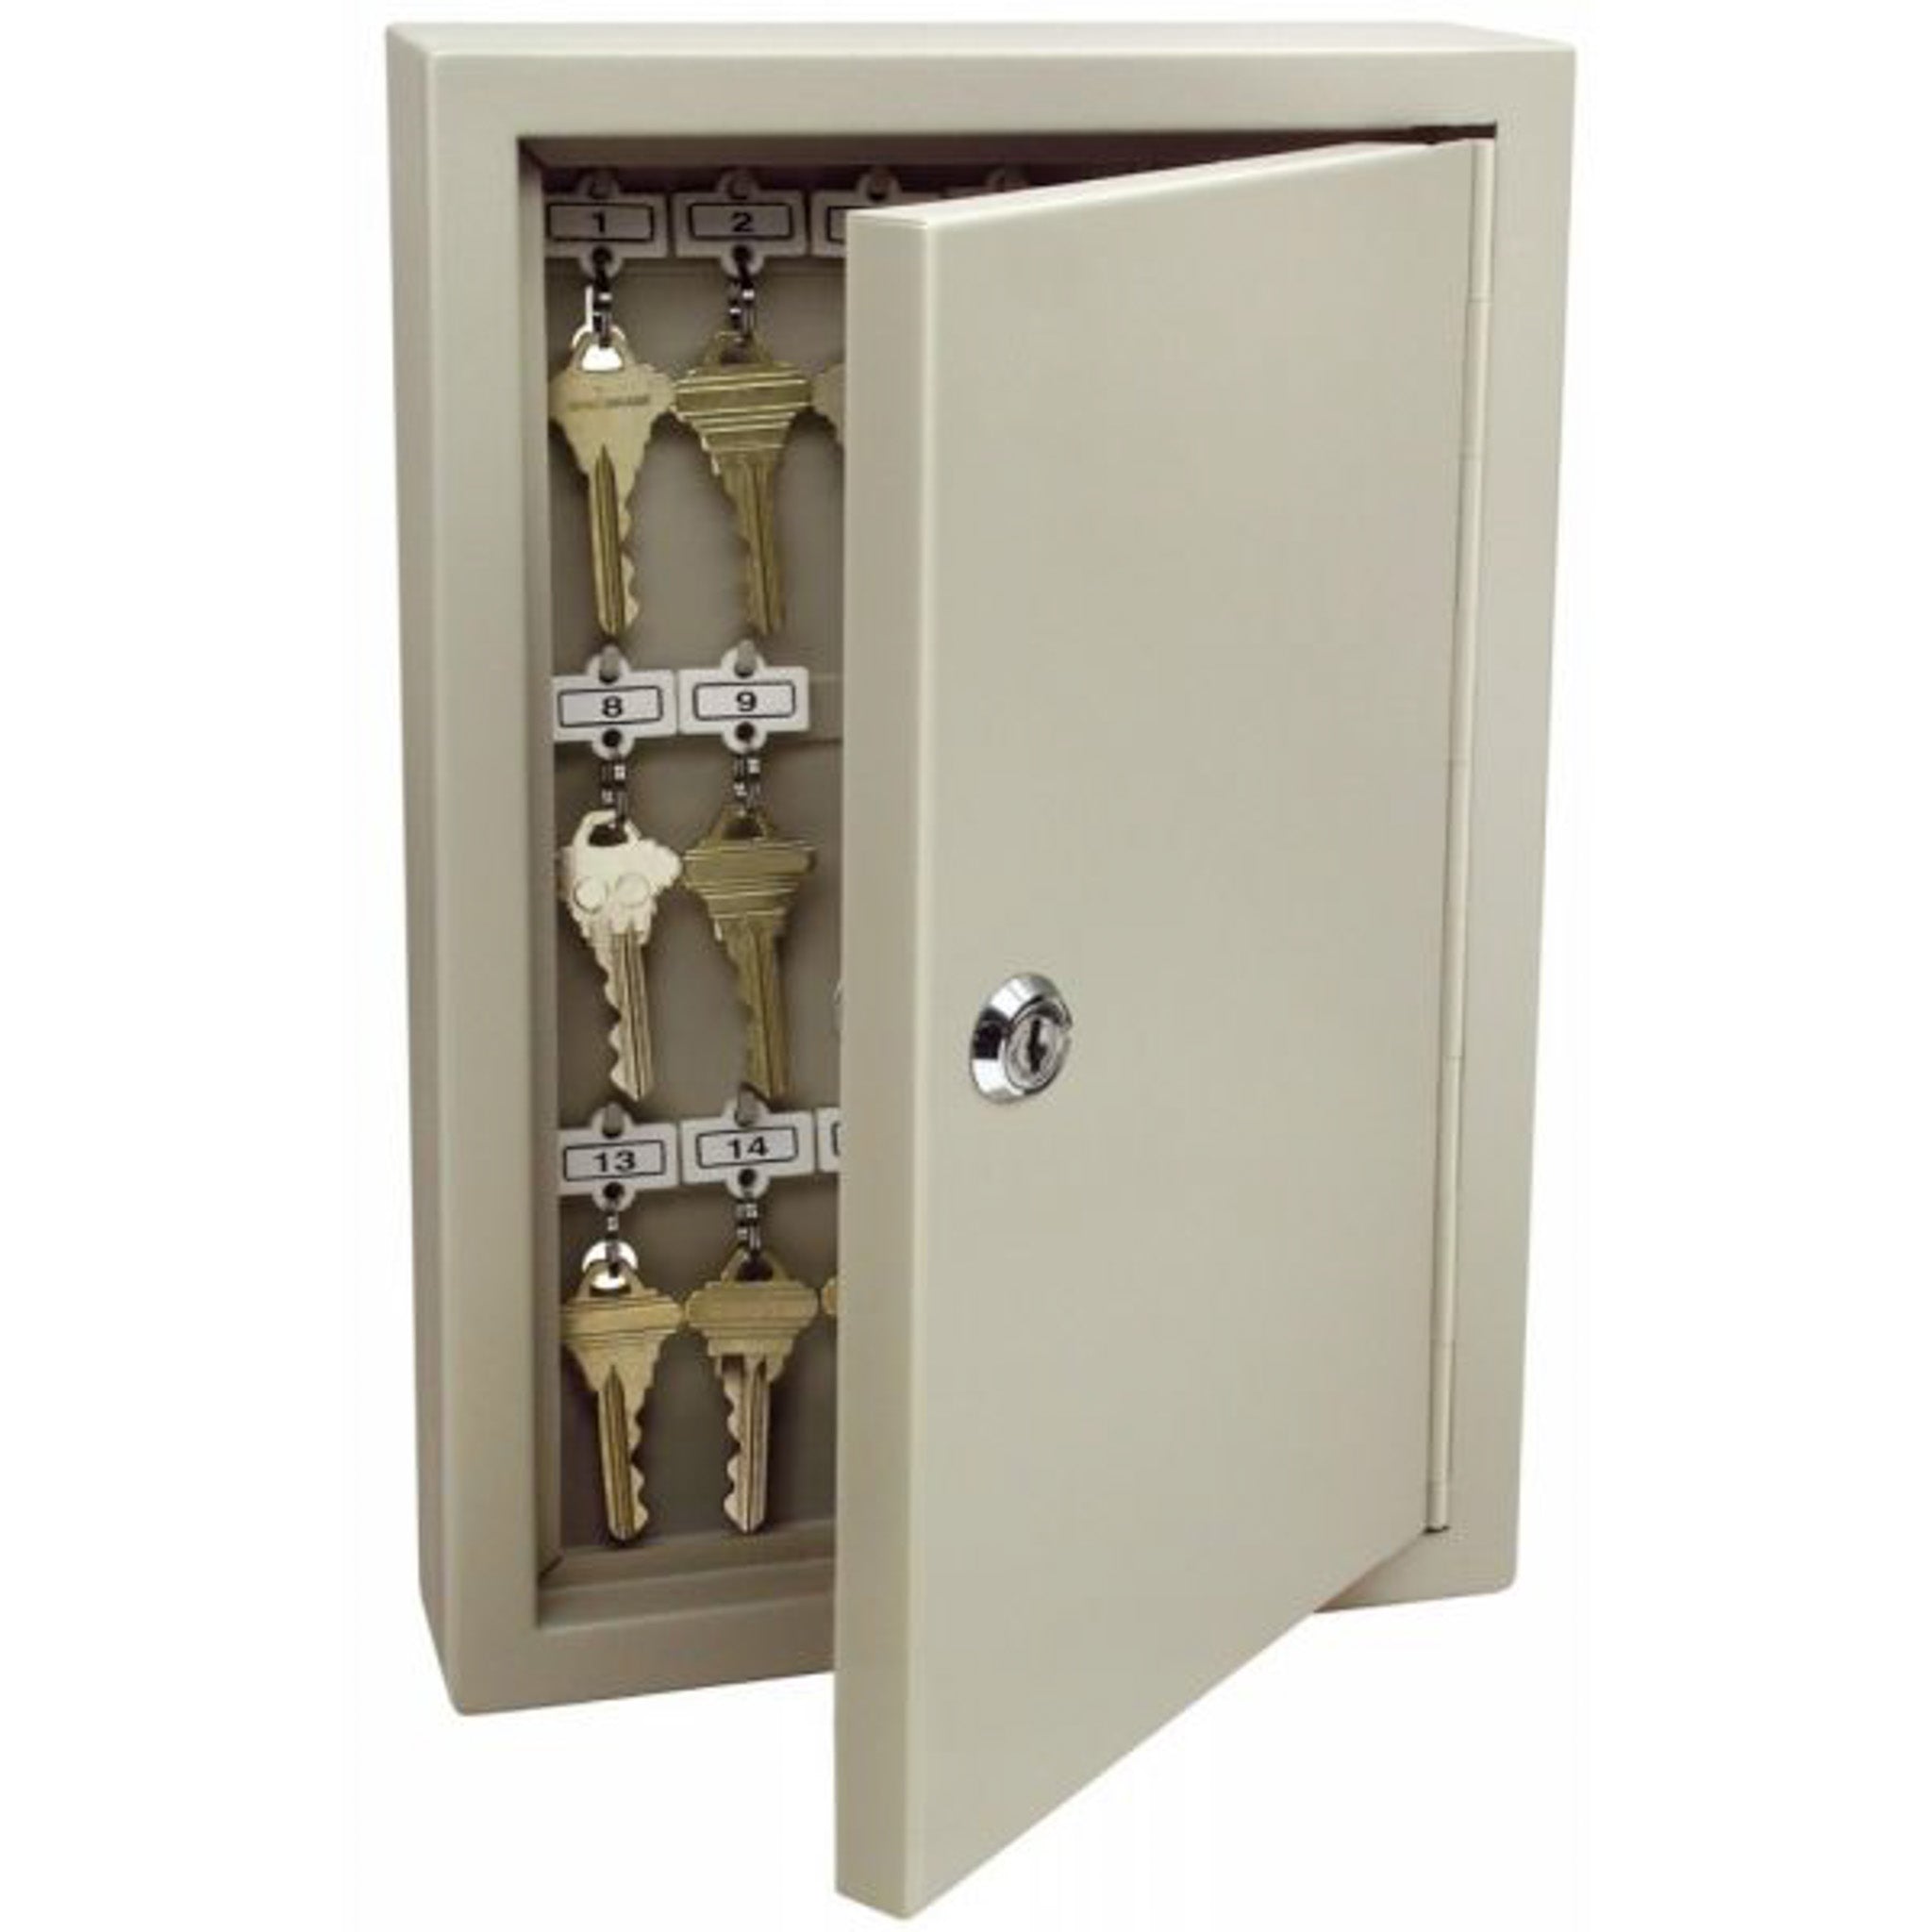 Open Kidde key locking key cabinet showing key hooks for capacity of 30 keys